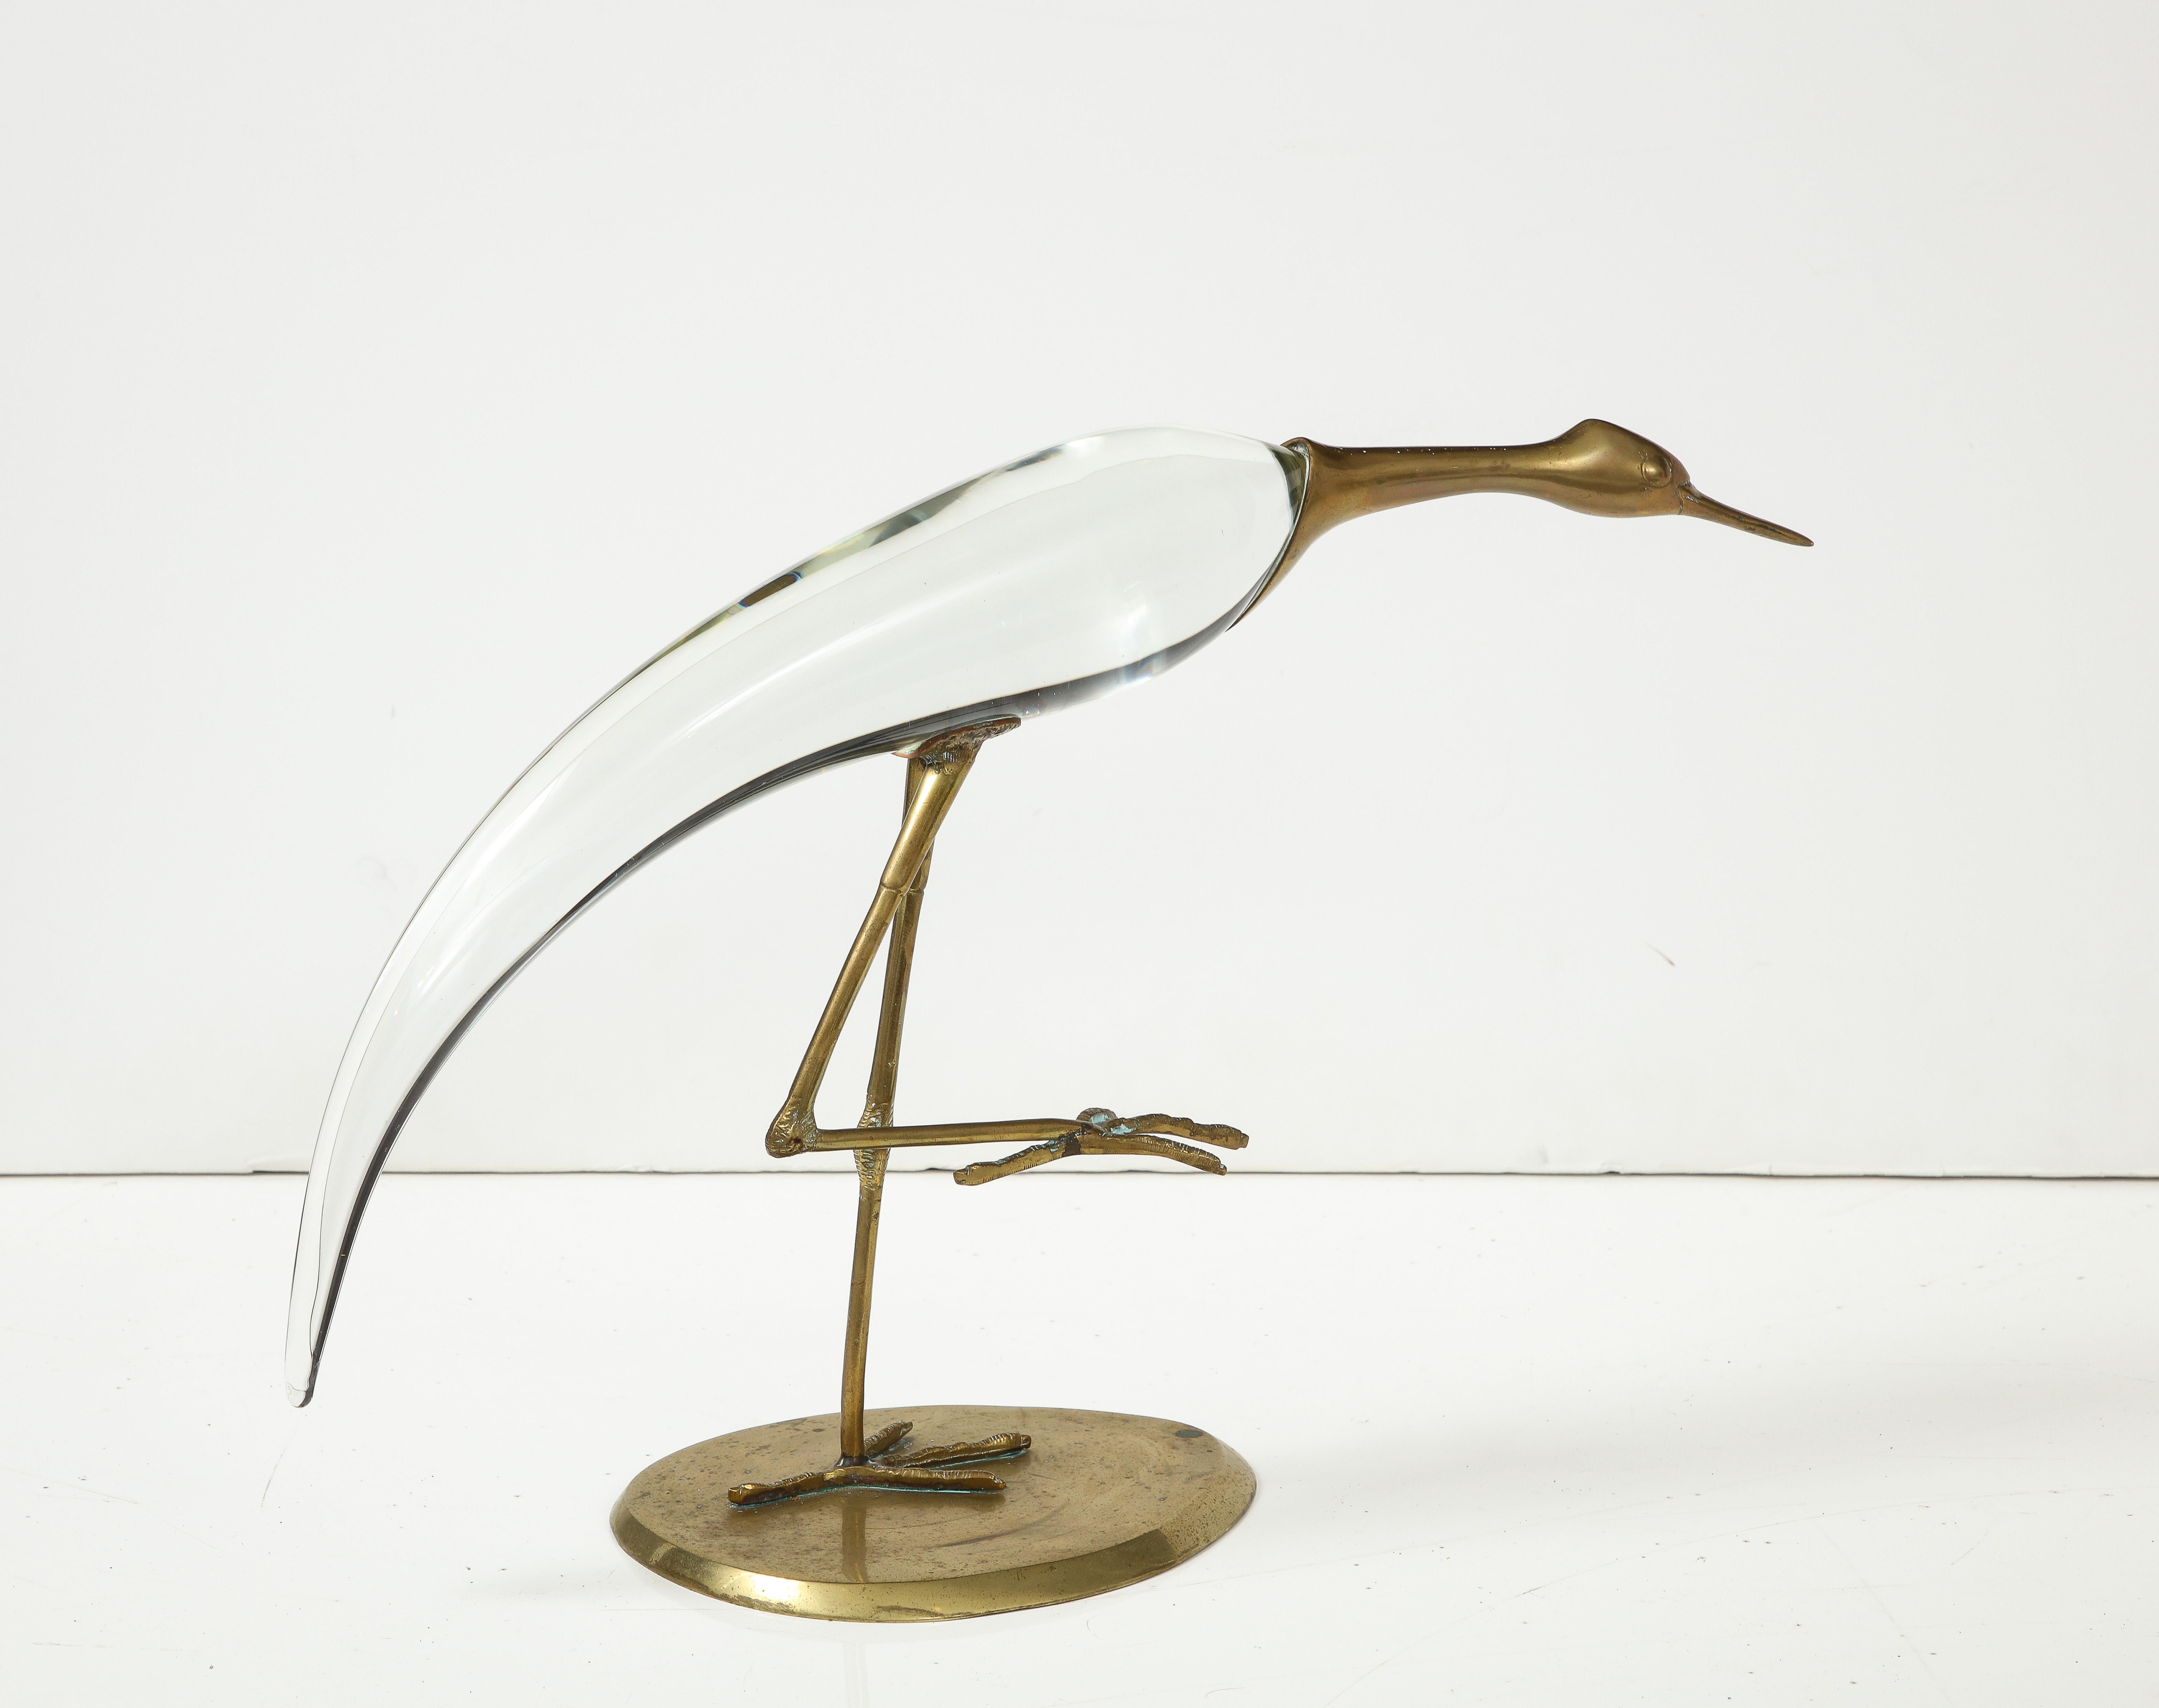 Midcentury stylized Egret bird sculpture featuring brass beak, feet, stand and a sinuous art glass body.